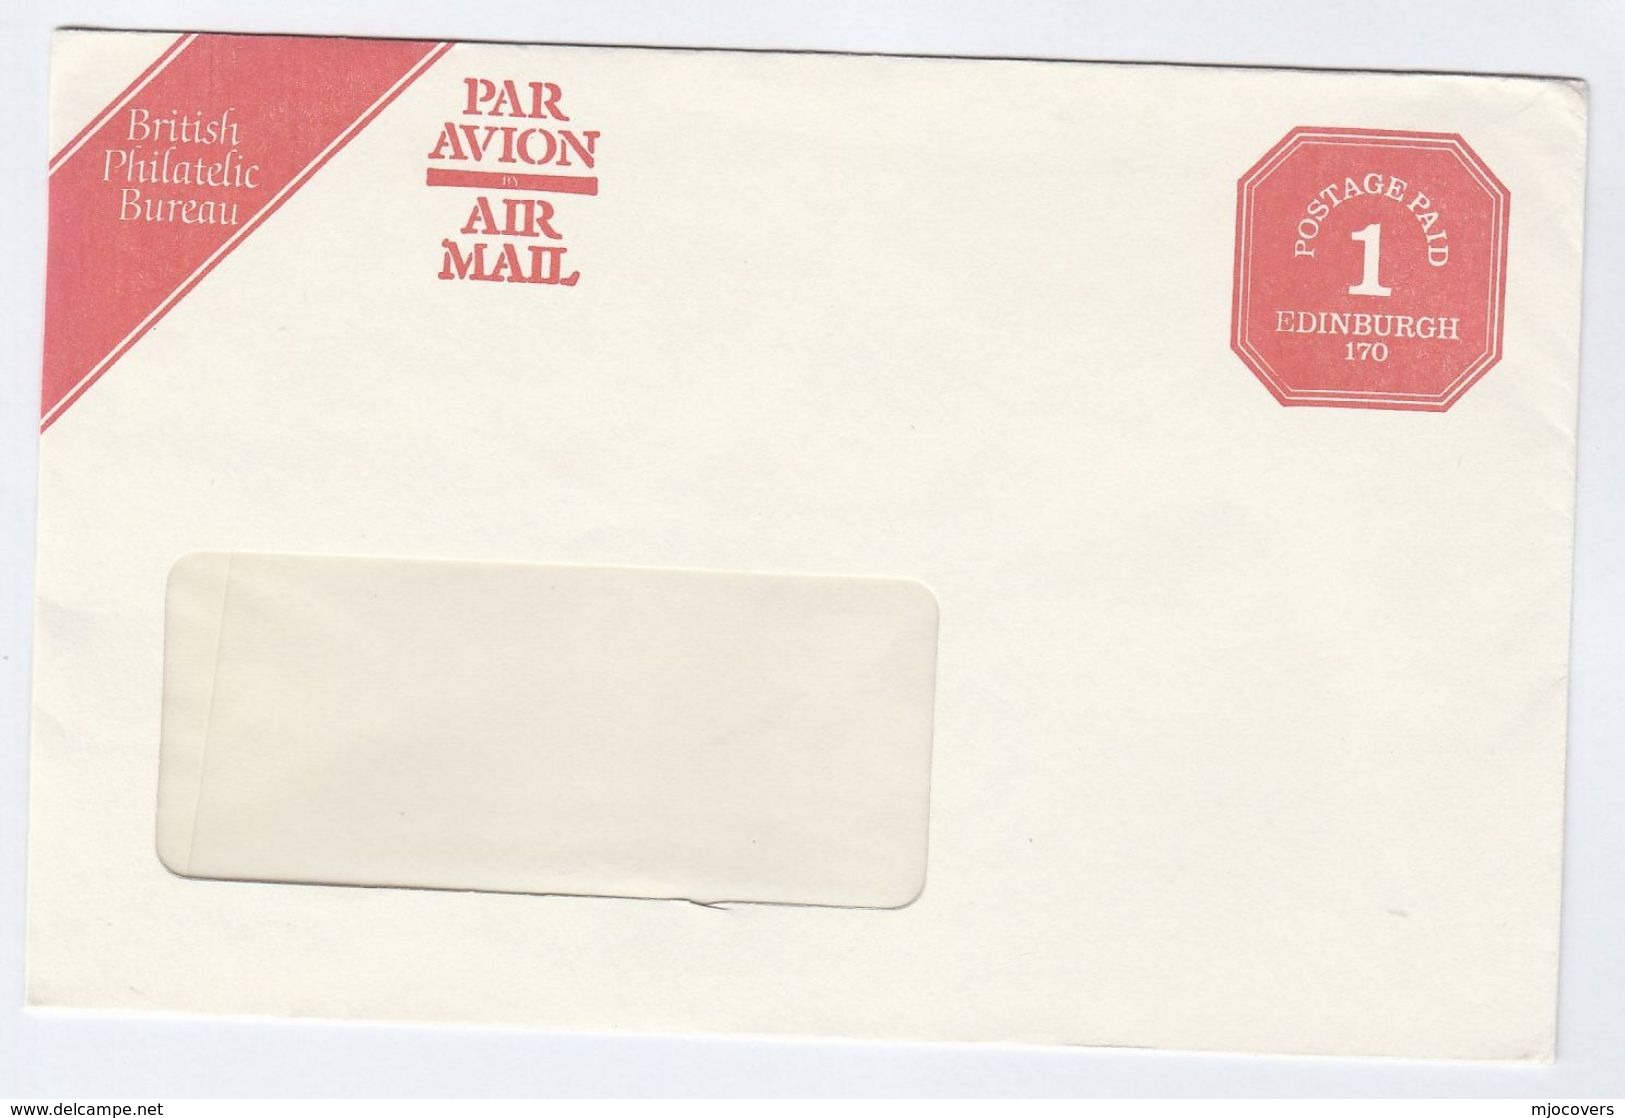 COVER Air Mail POSTAGE PAID 1 EDINBURGH 170 British Philatelic Bureau Postage Stationery GB - Lettres & Documents